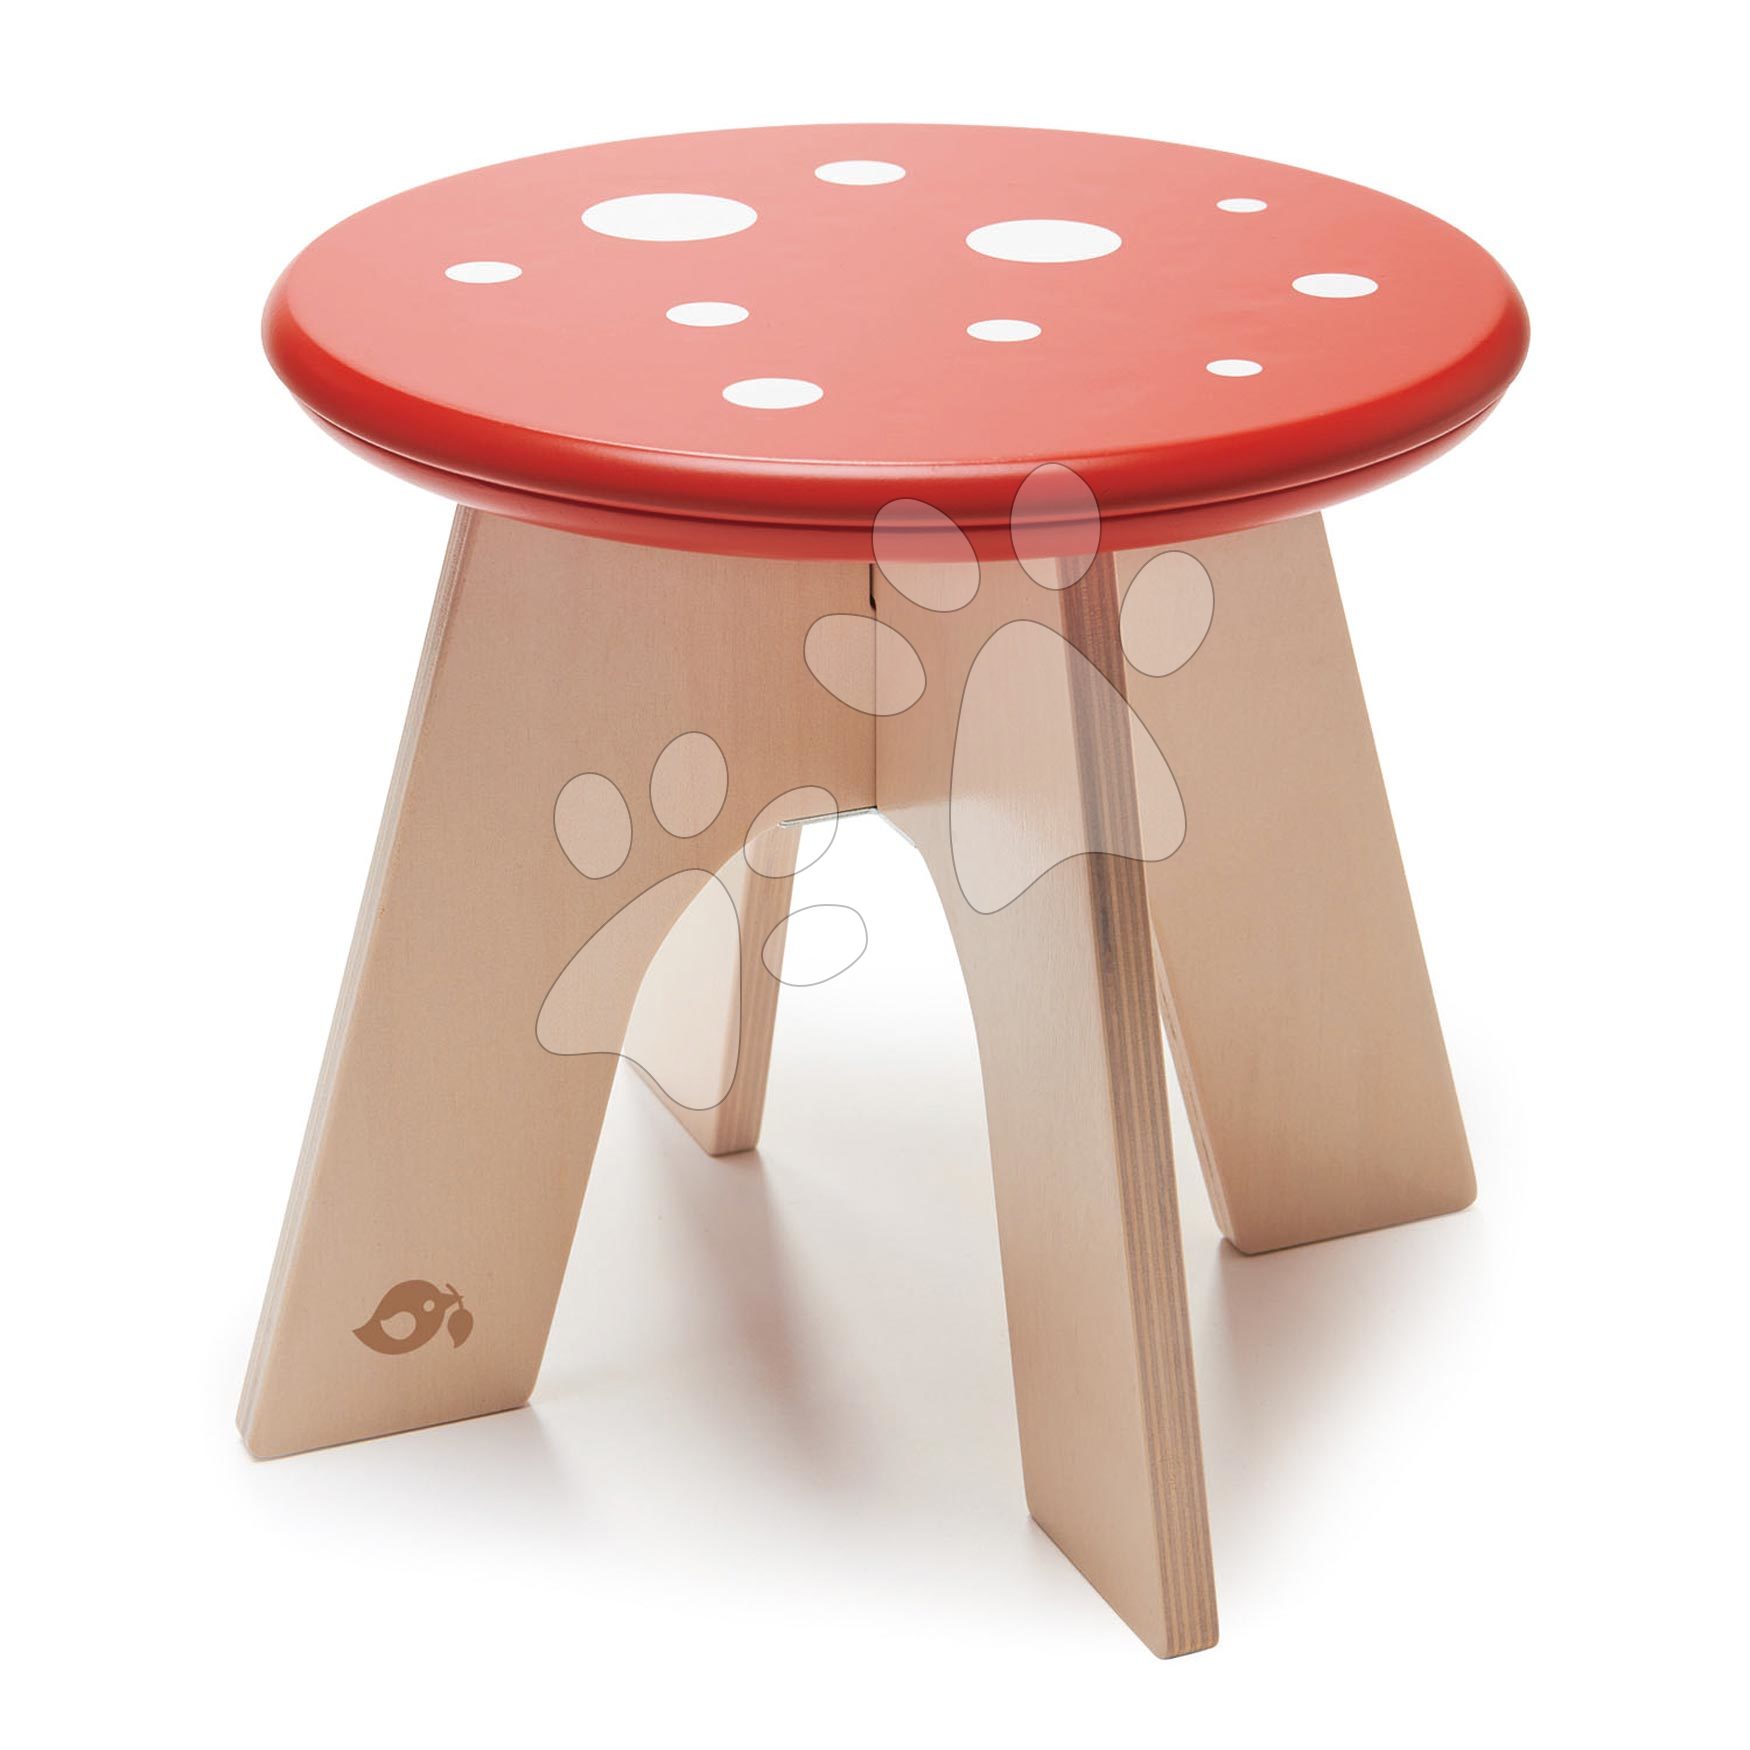 Drevená stolička hríbik Toadstool Tender Leaf Toys muchotrávka s červeným bodkovaným sedadlom